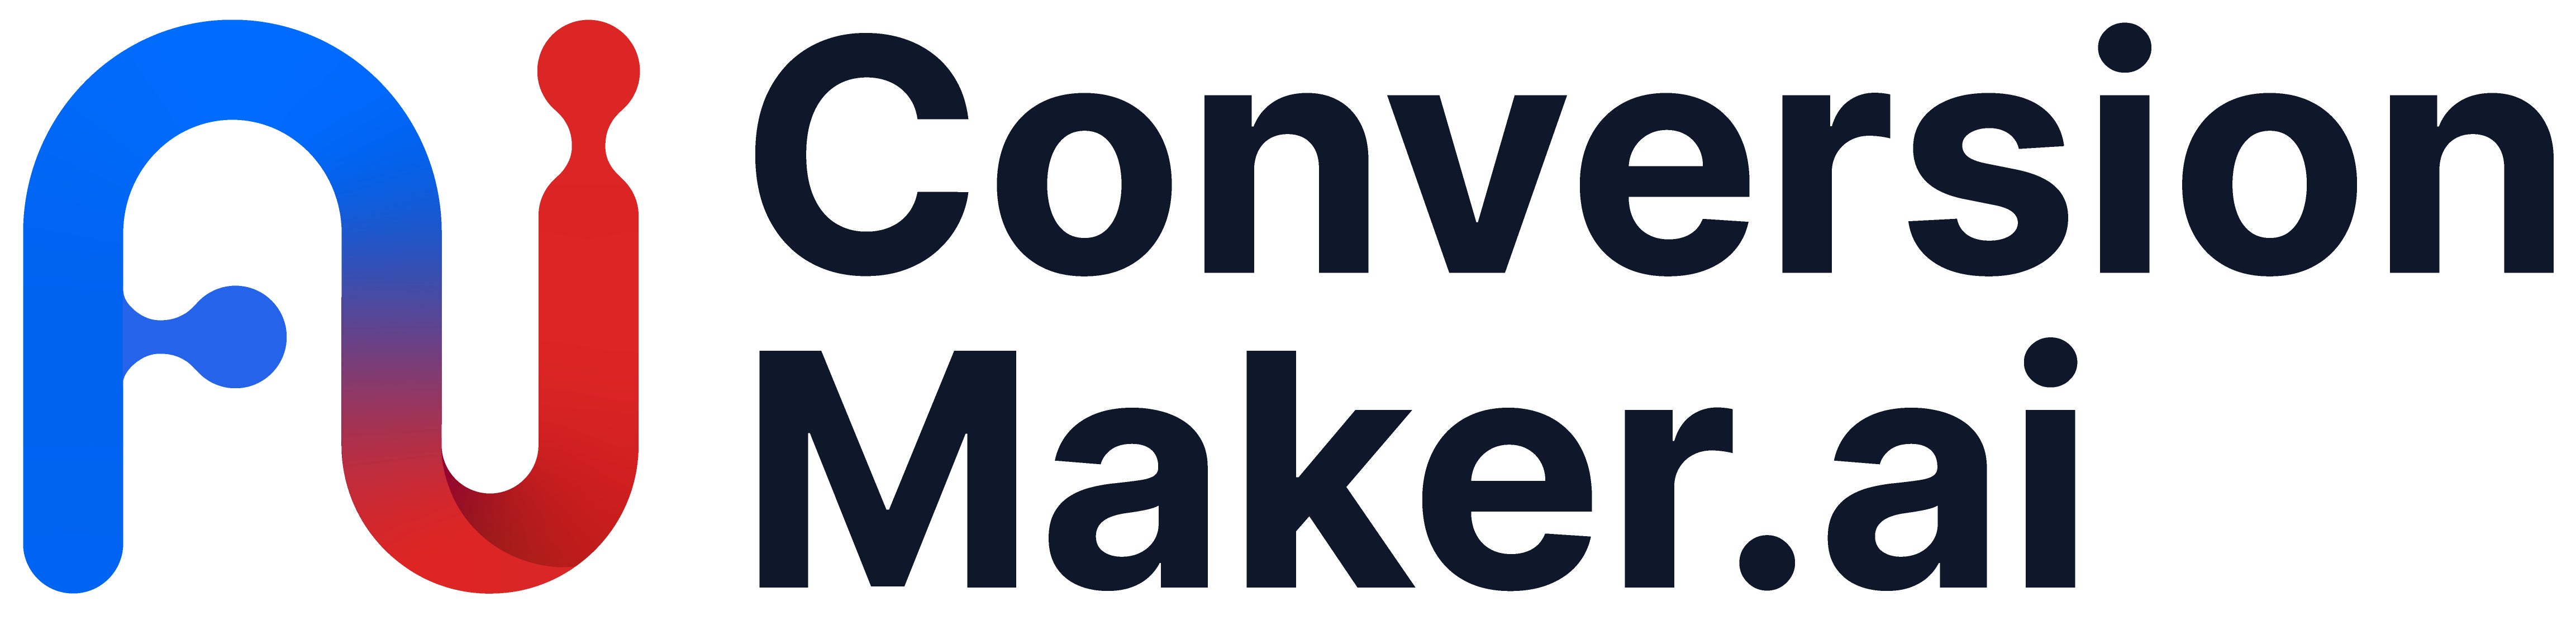 Conversionmaker.ai Logo